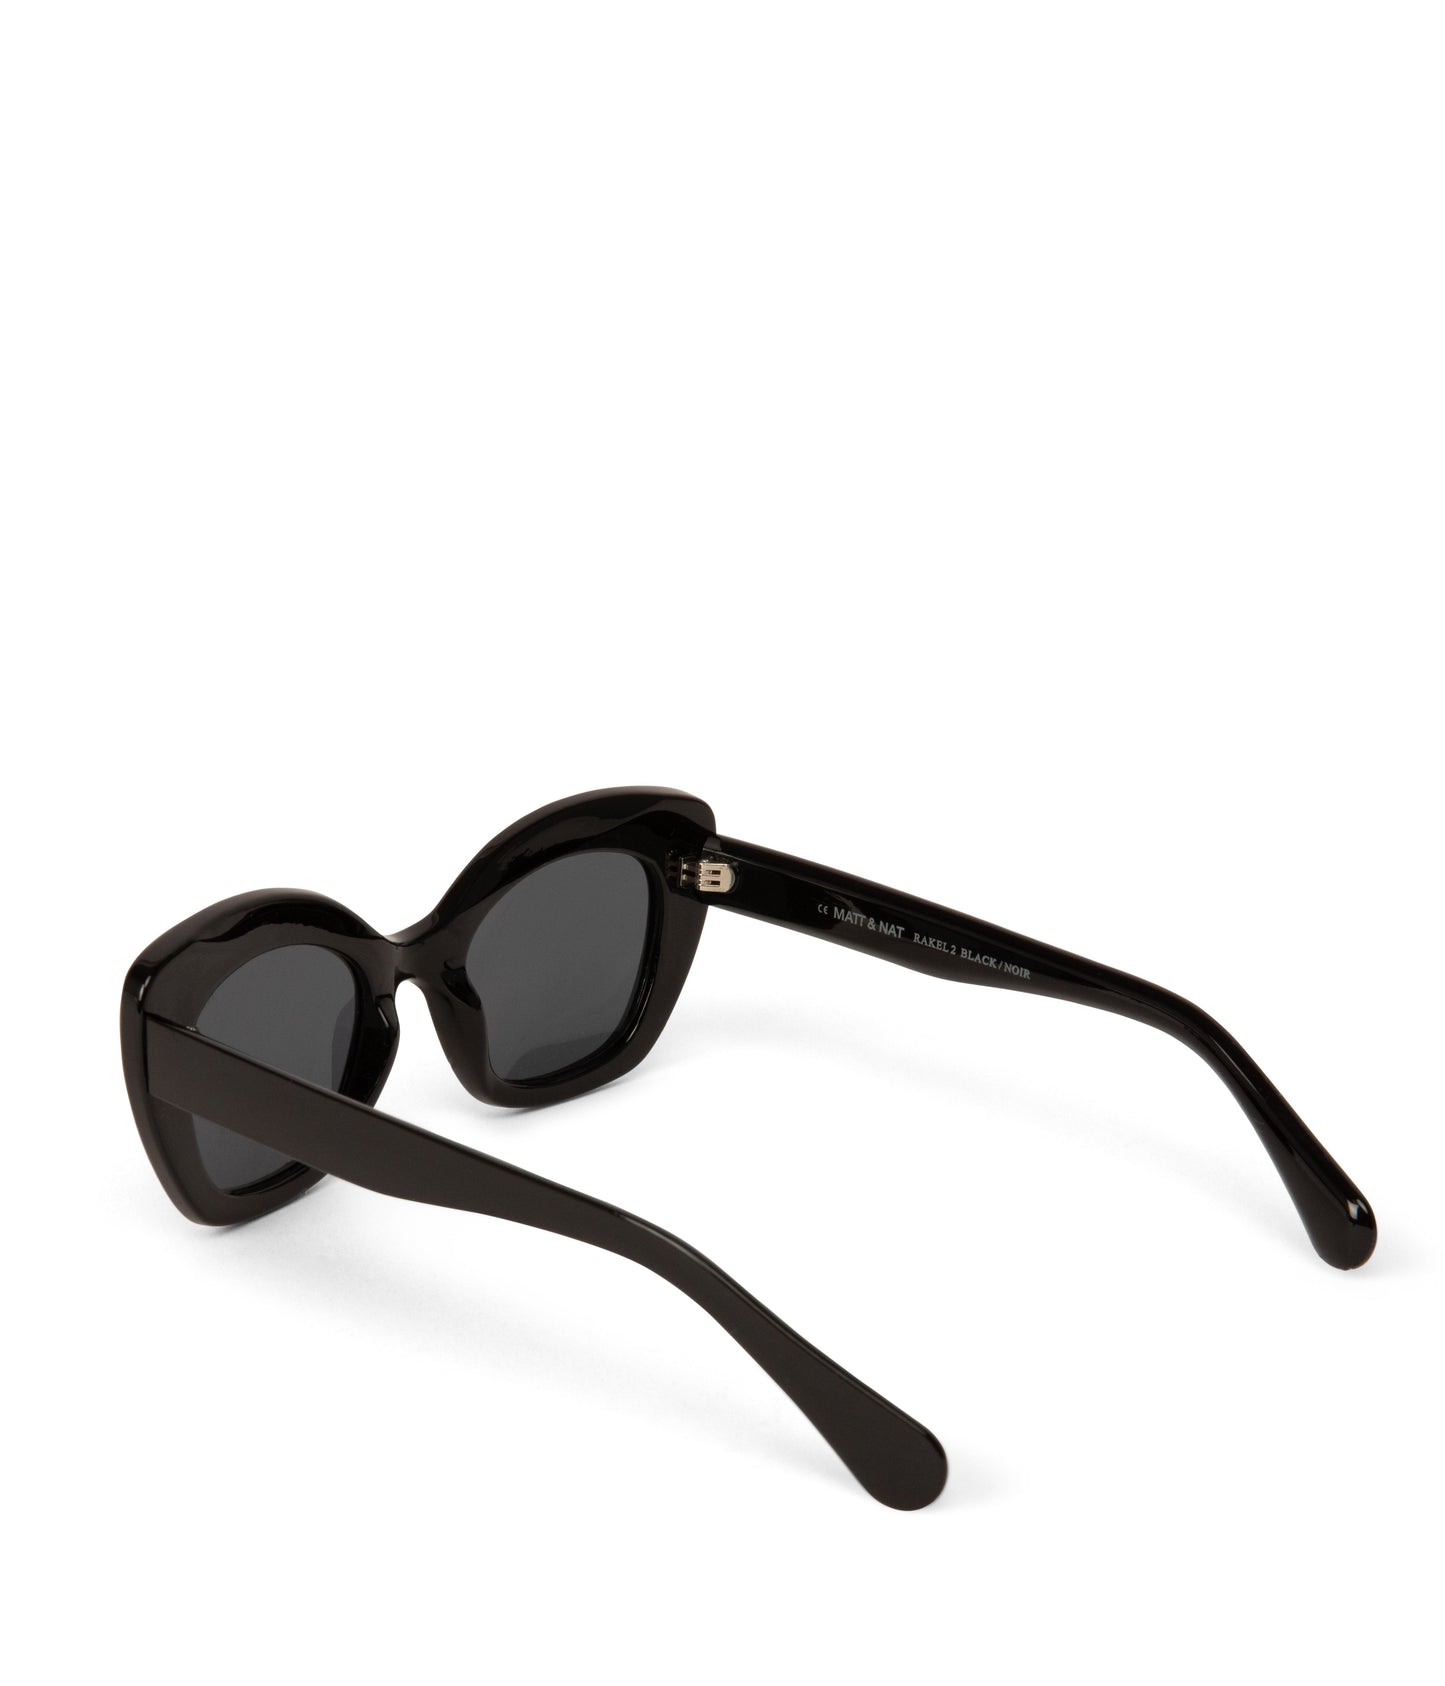 RAKEL-2 Recycled Cat-Eye Sunglasses | Color: Black, Grey - variant::black